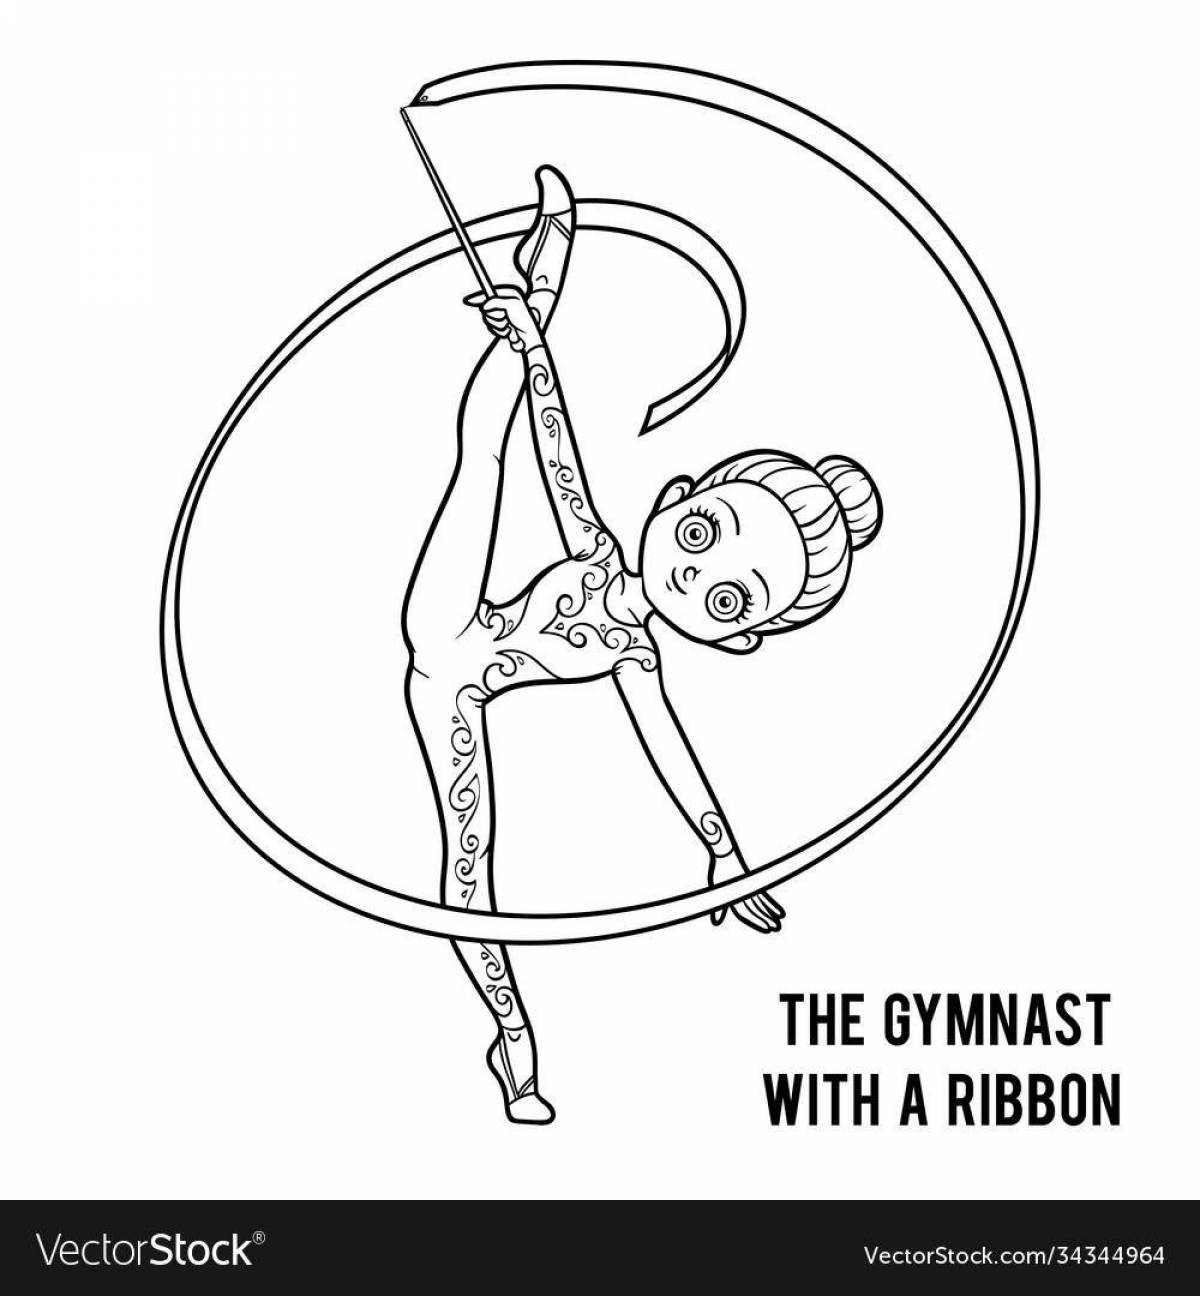 Coloring book spellbinding rhythmic gymnastics